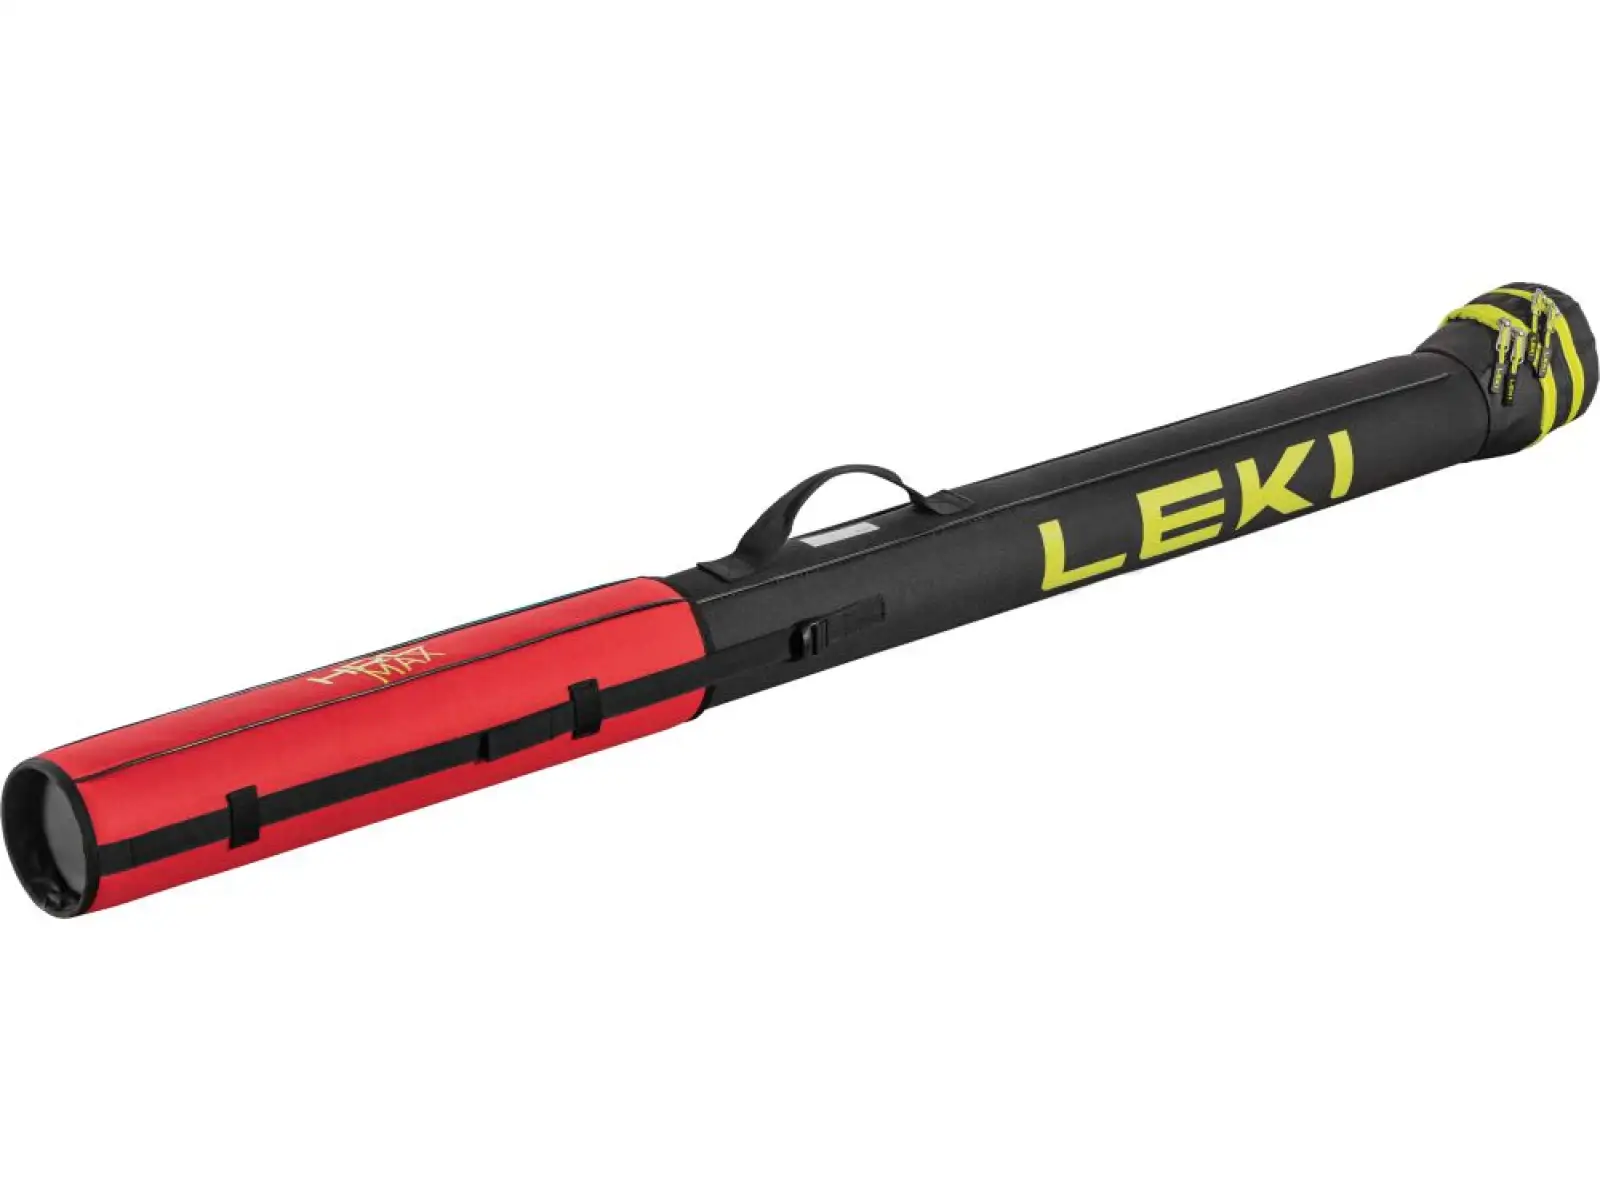 Leki Cross Country Tube Bag taška bright red/black/neon yellow vel. 150-190 cm